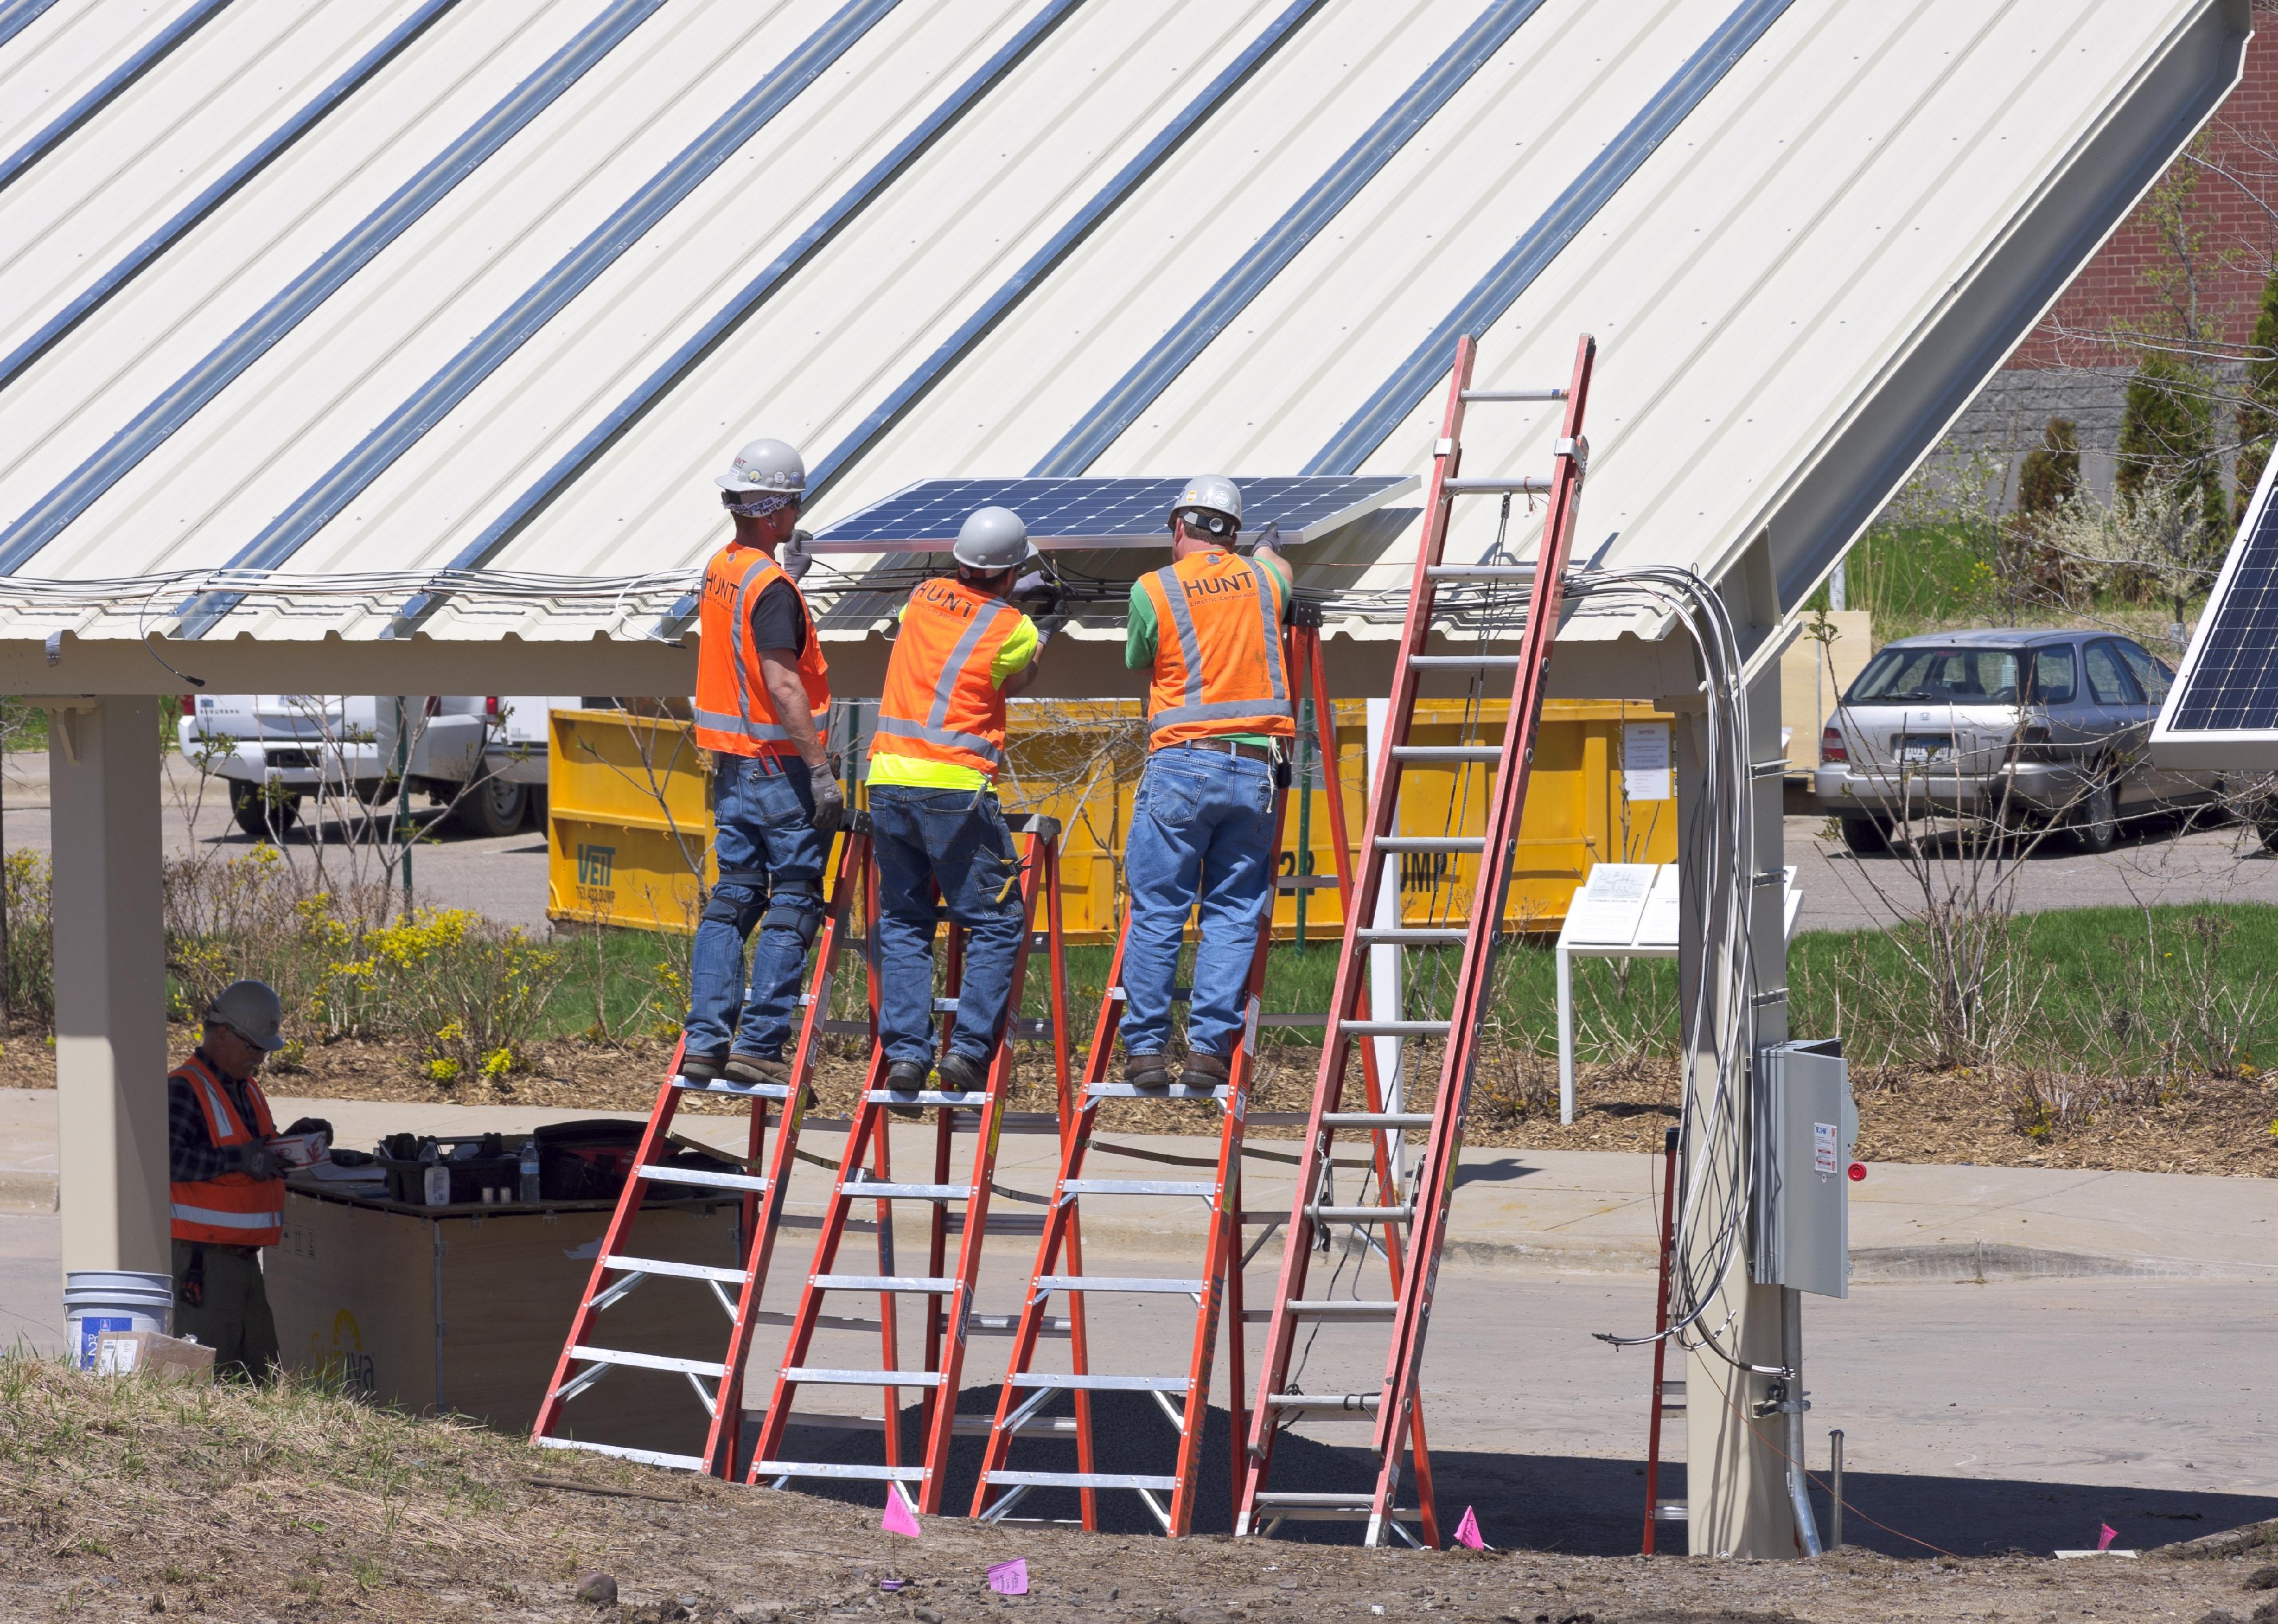 Workers install solar carport